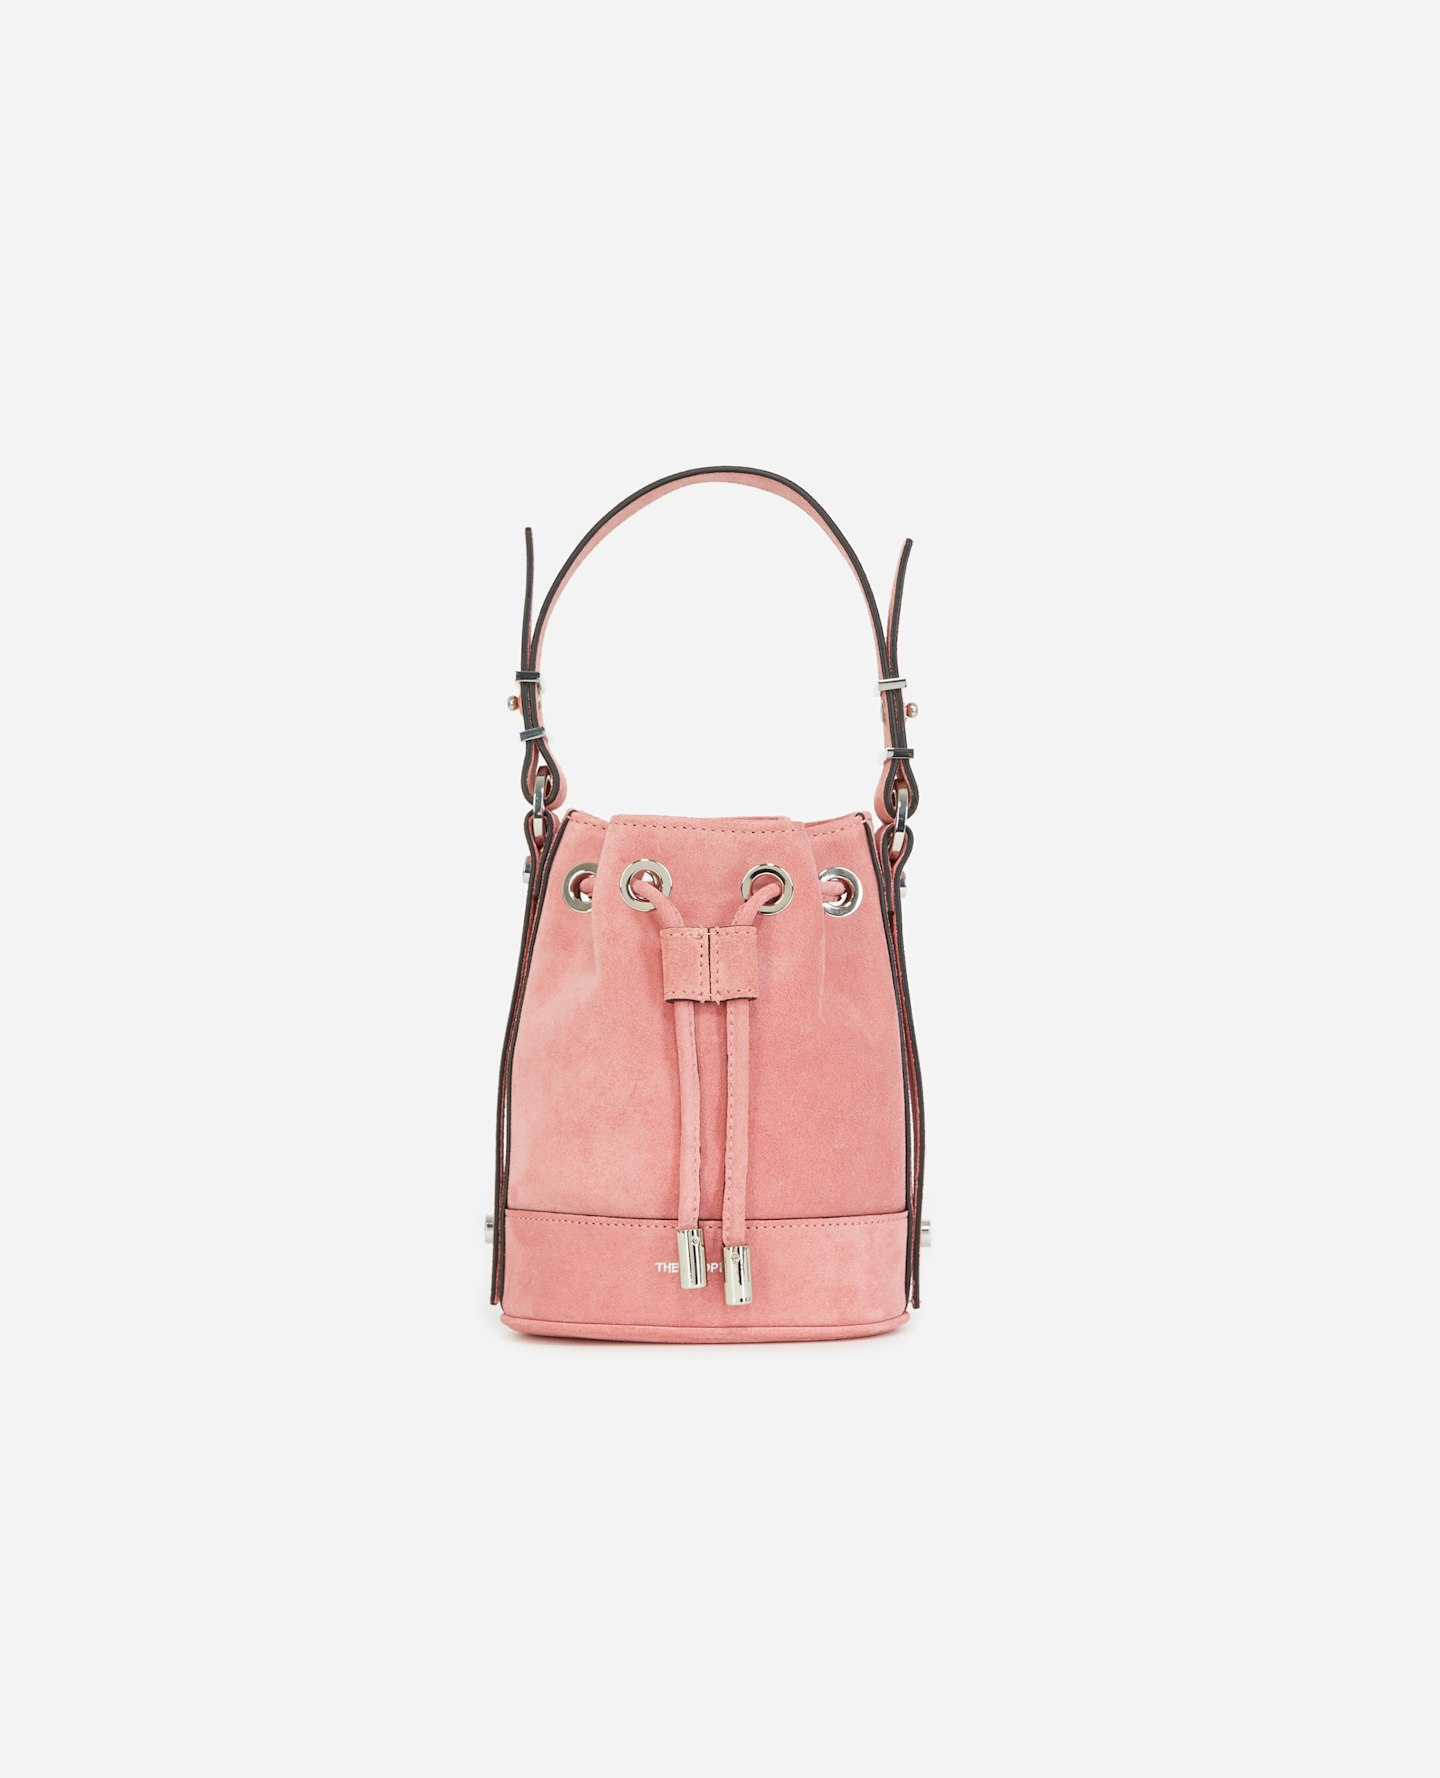 The Kooples, Nano Tina Bag In Pink Suede, £240